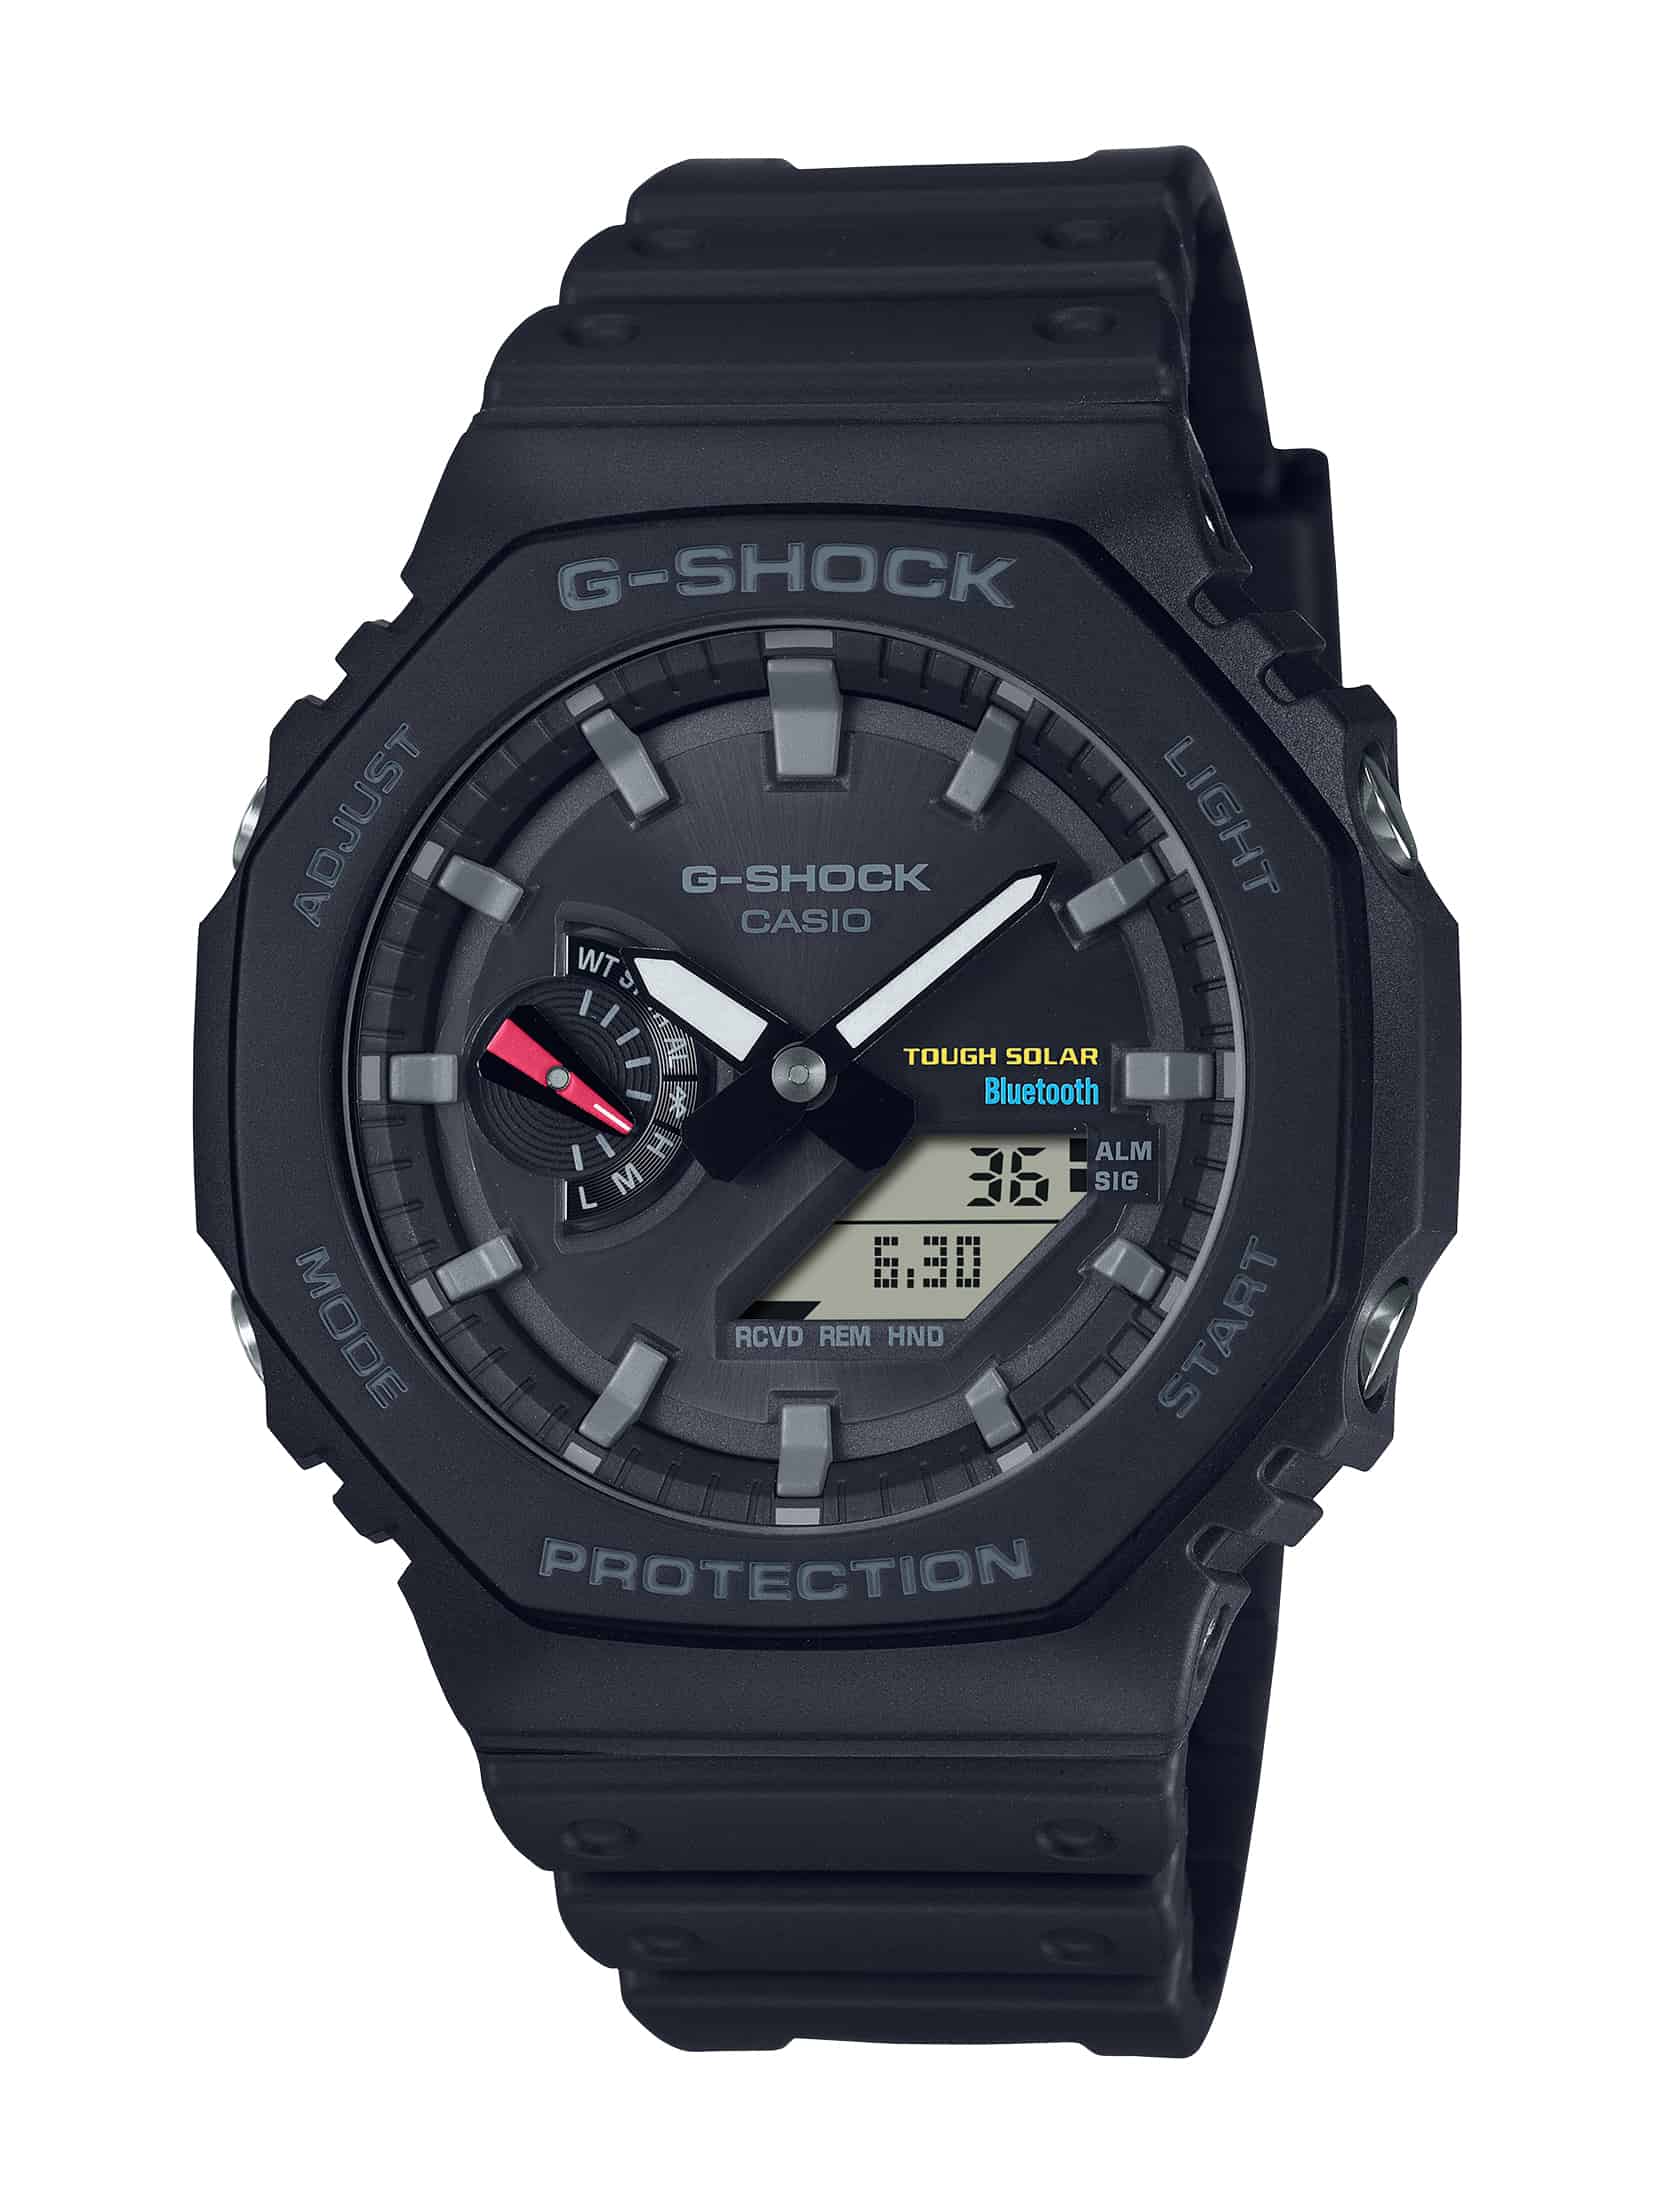 G-Shock Upgrades A Crowd Favorite With The New GAB2100 - Worn & Wound